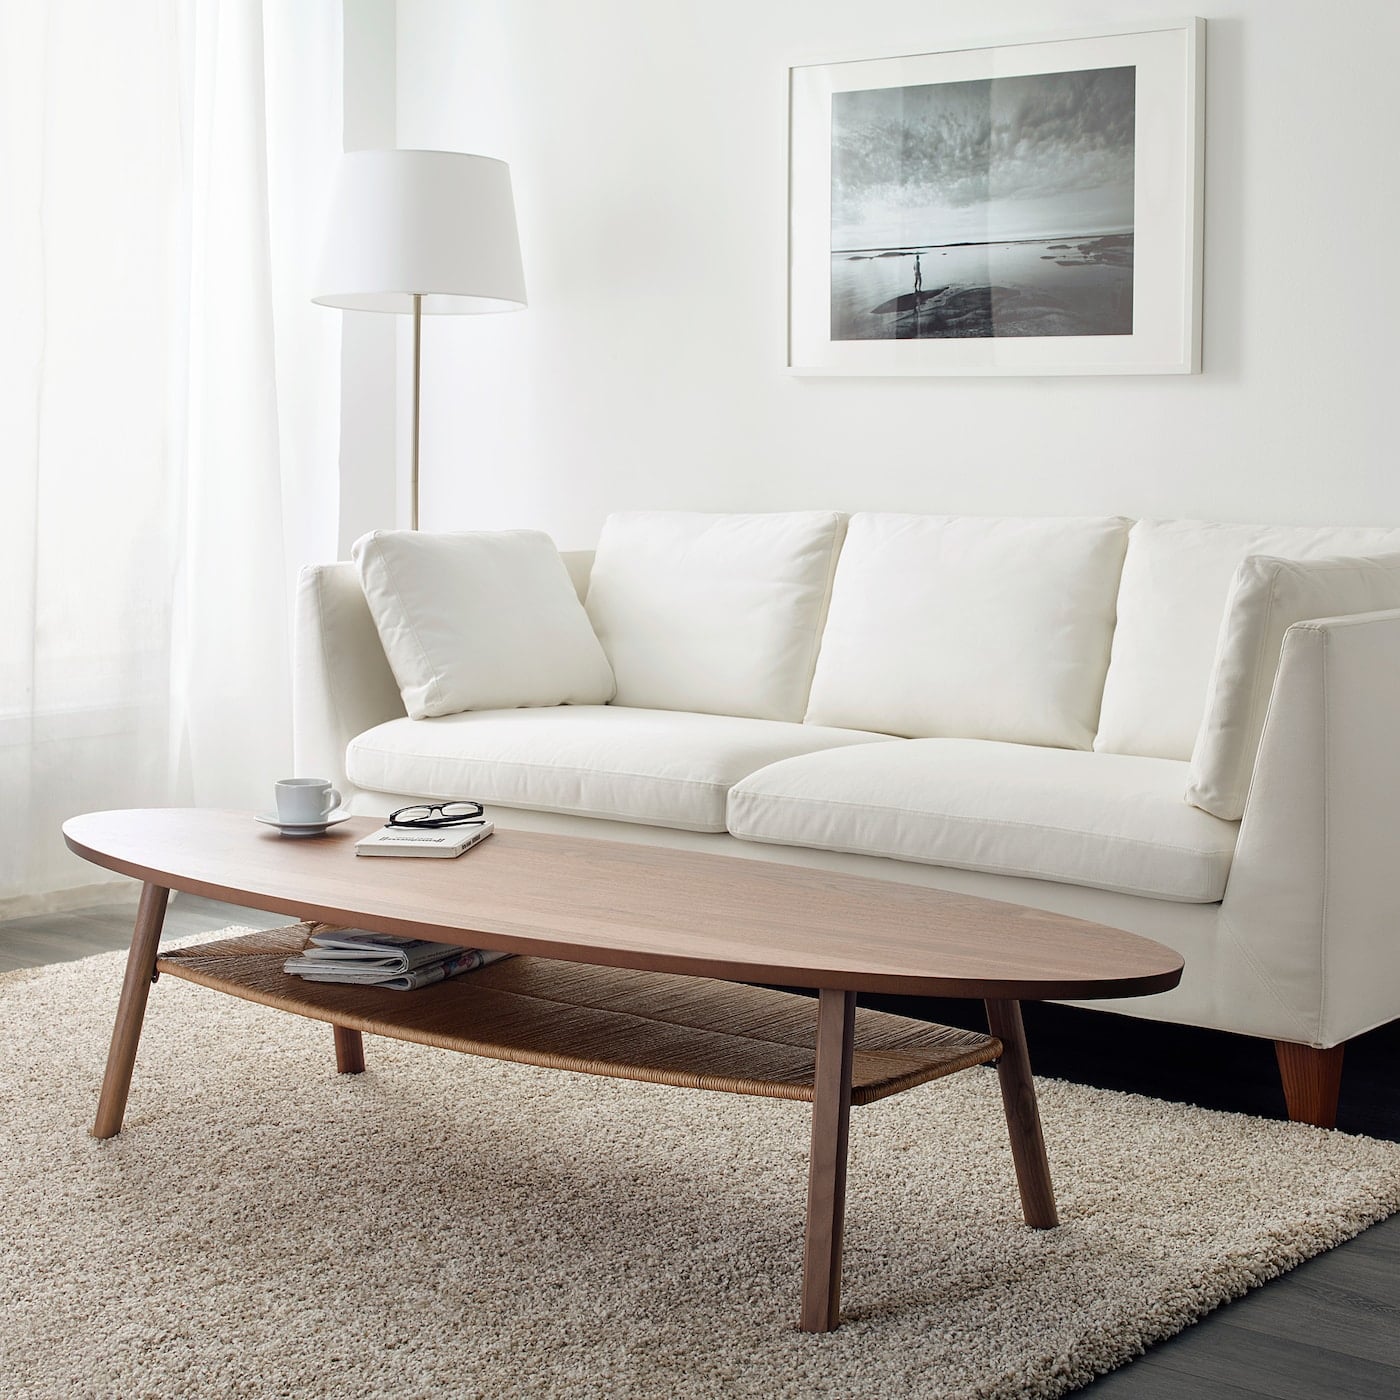 Best Ikea Living Room Furniture With Storage POPSUGAR Home